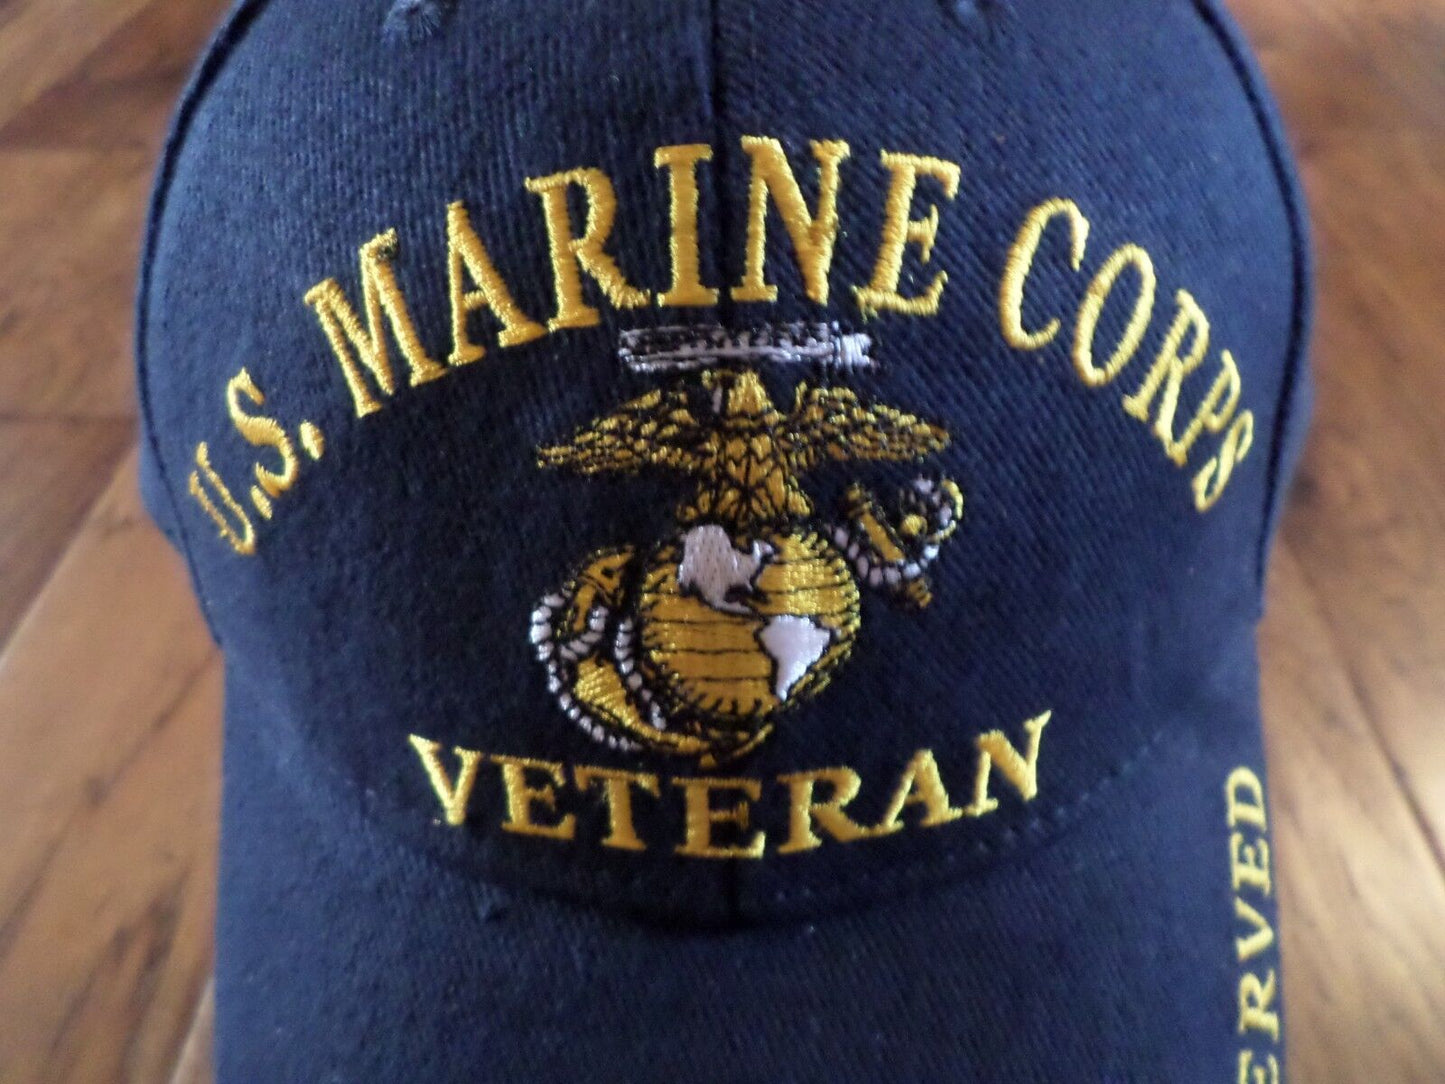 U.S Military Marine Corps Veteran Embroidered USMC Licensed Baseball Hat Cap